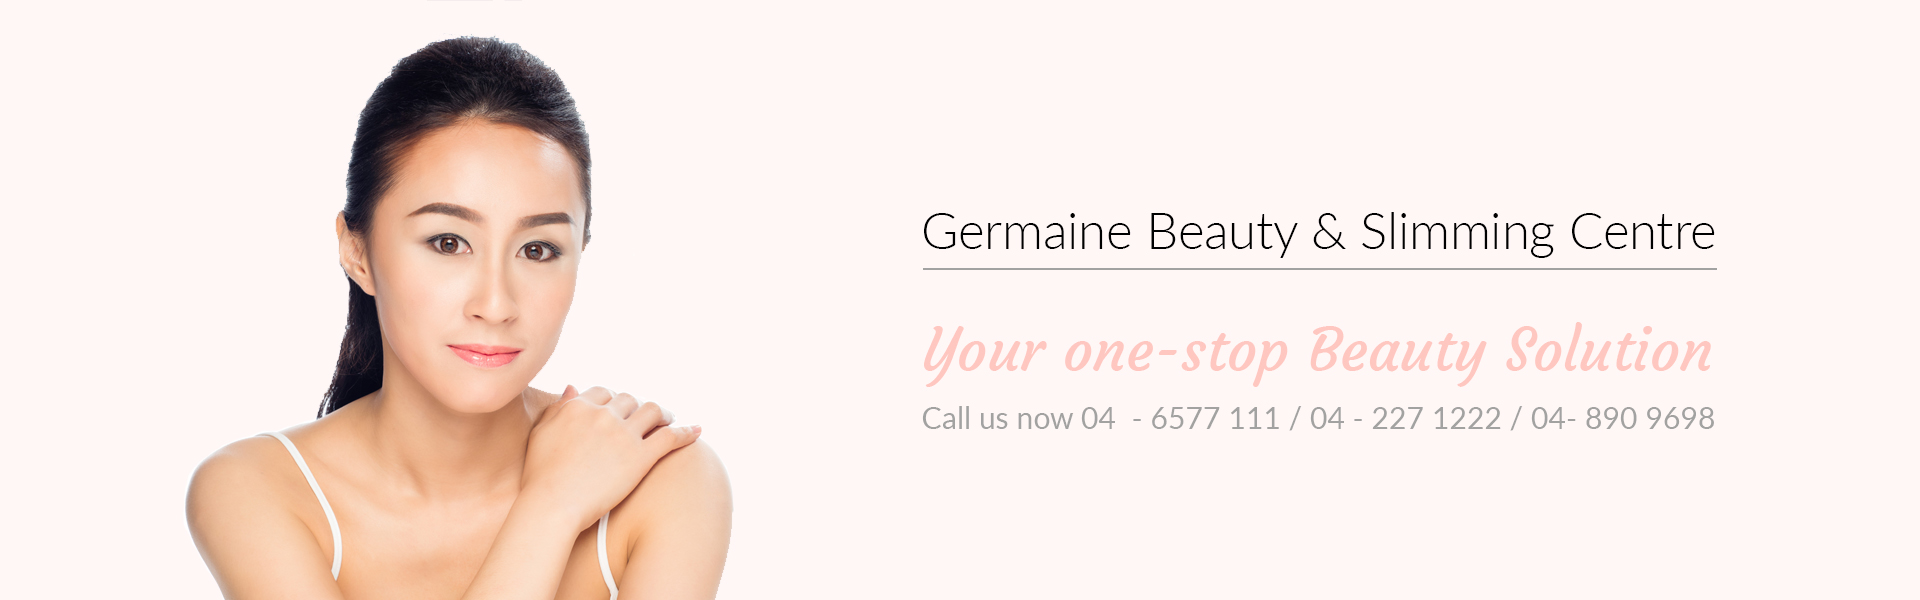 Germaine Beauty & Slimming Center